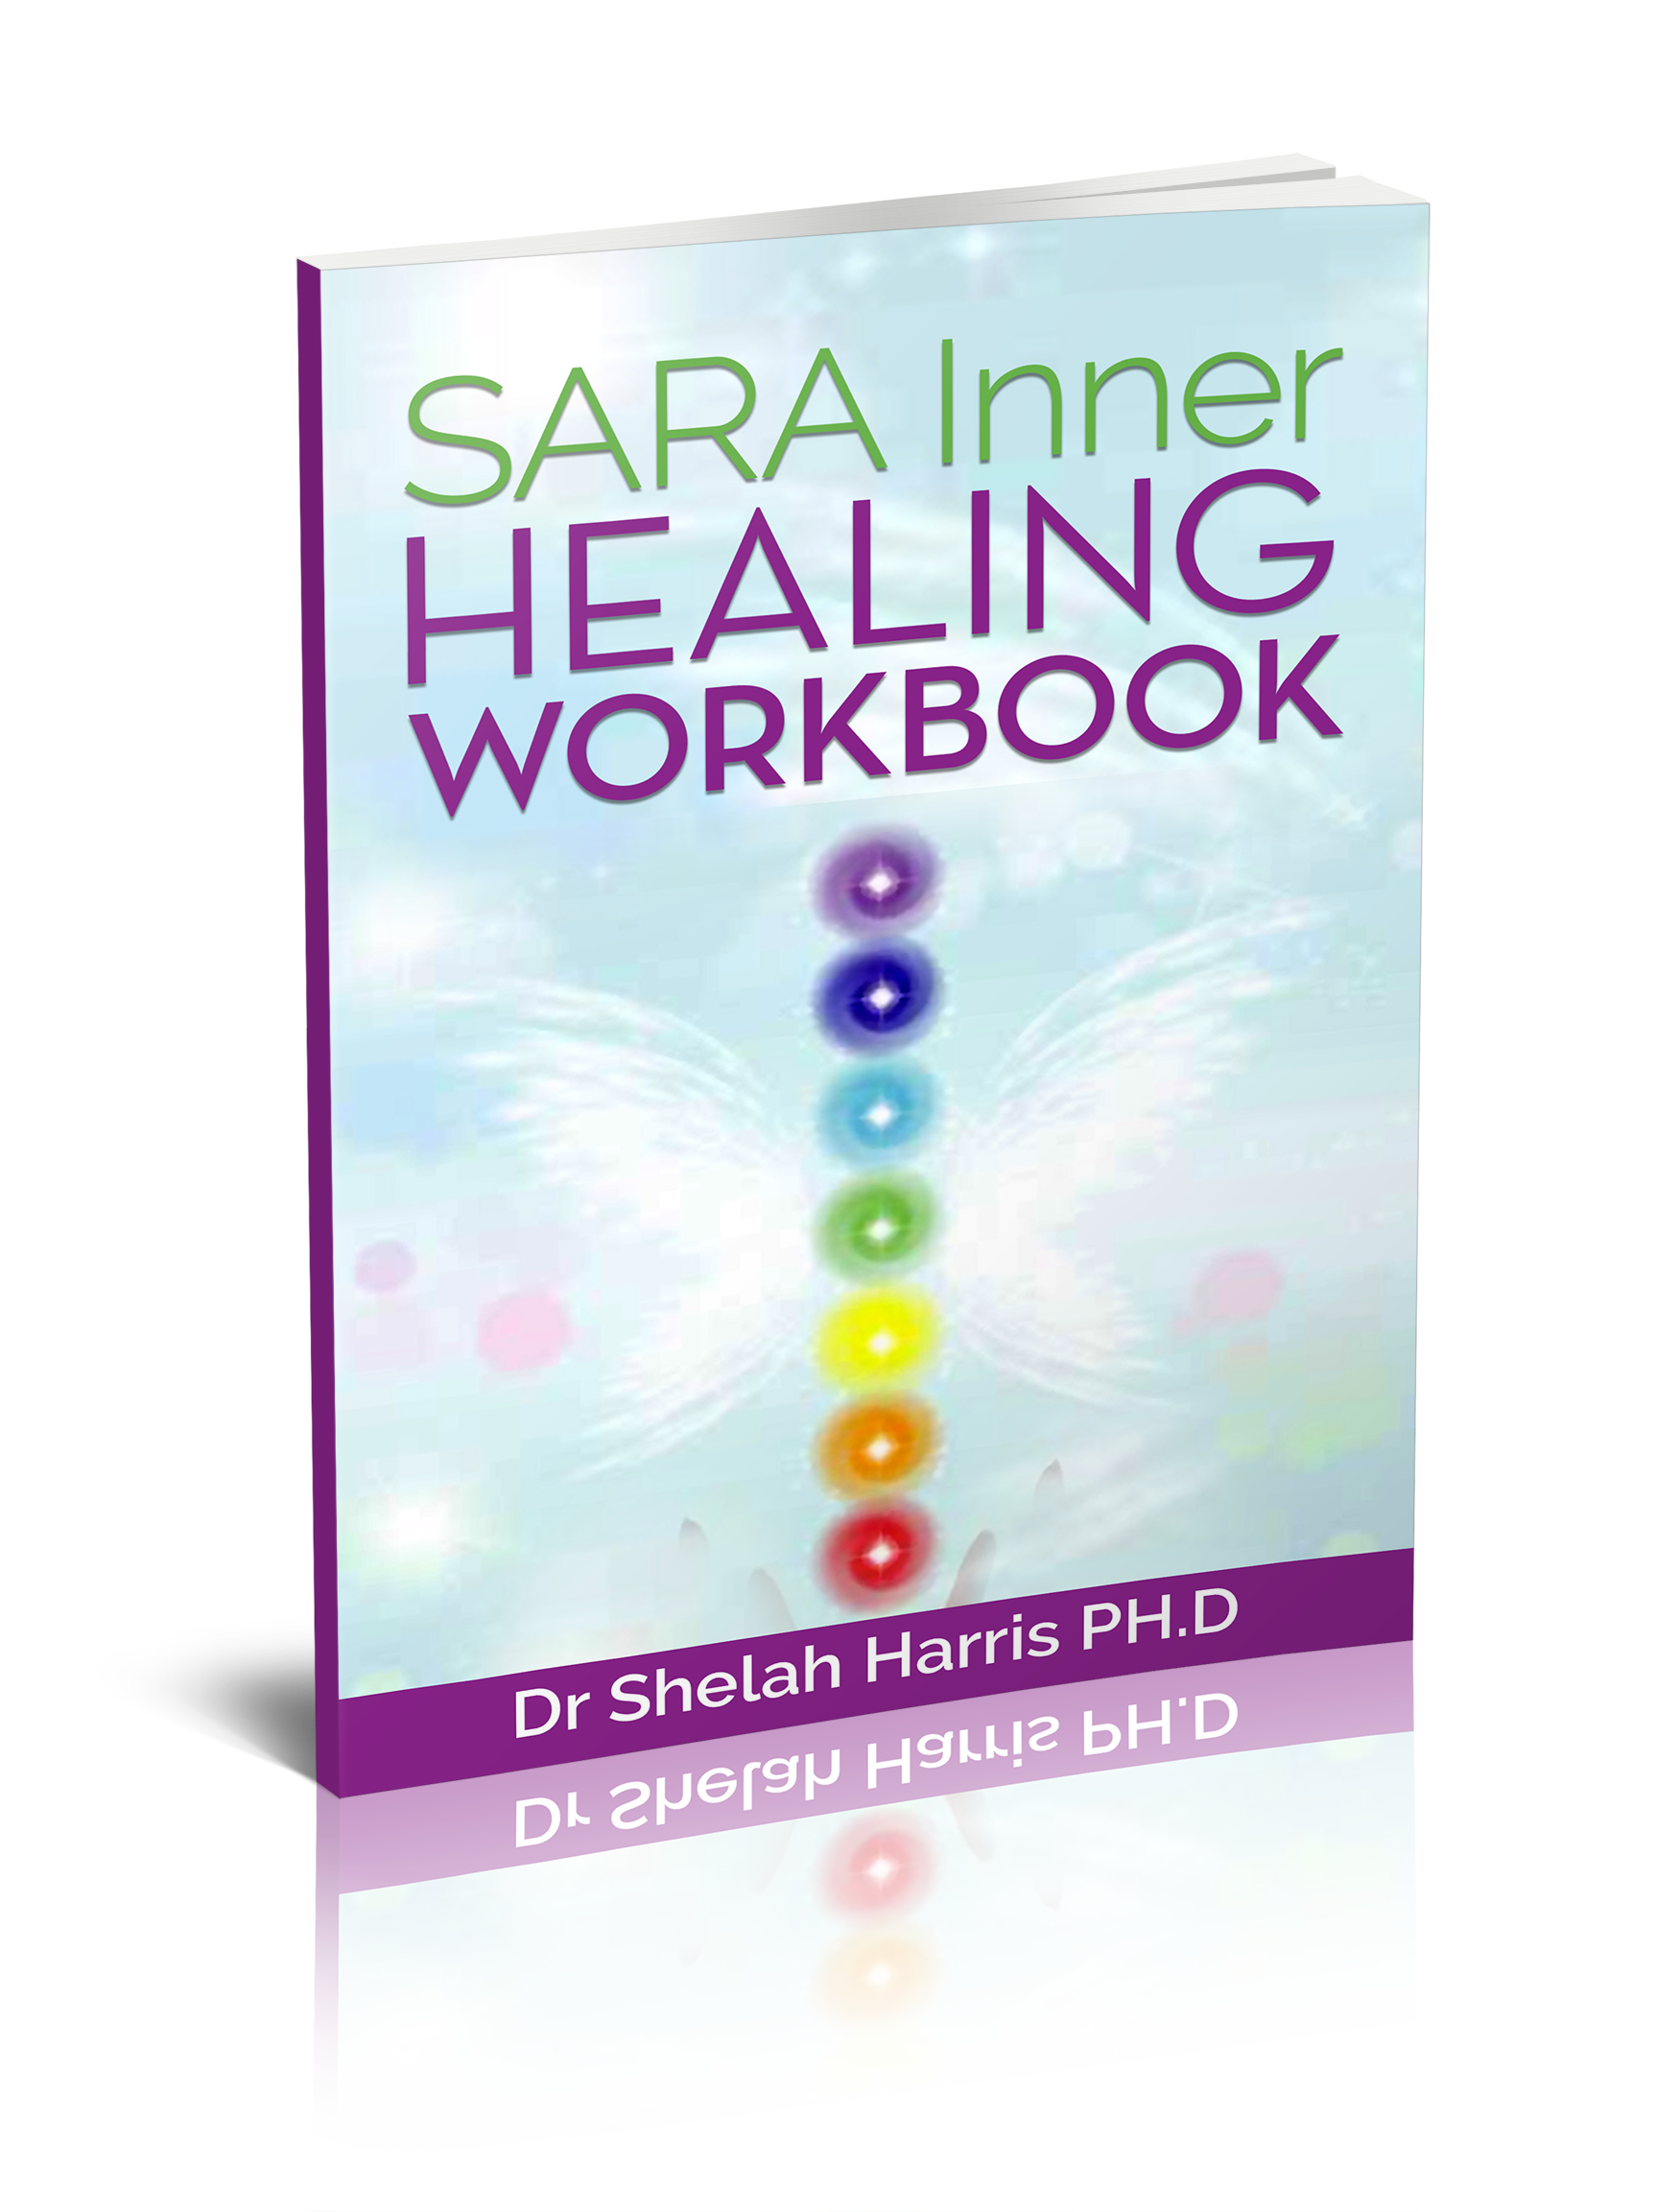 Sarainnerhealing book-1 Personal Growth For Success Journal  